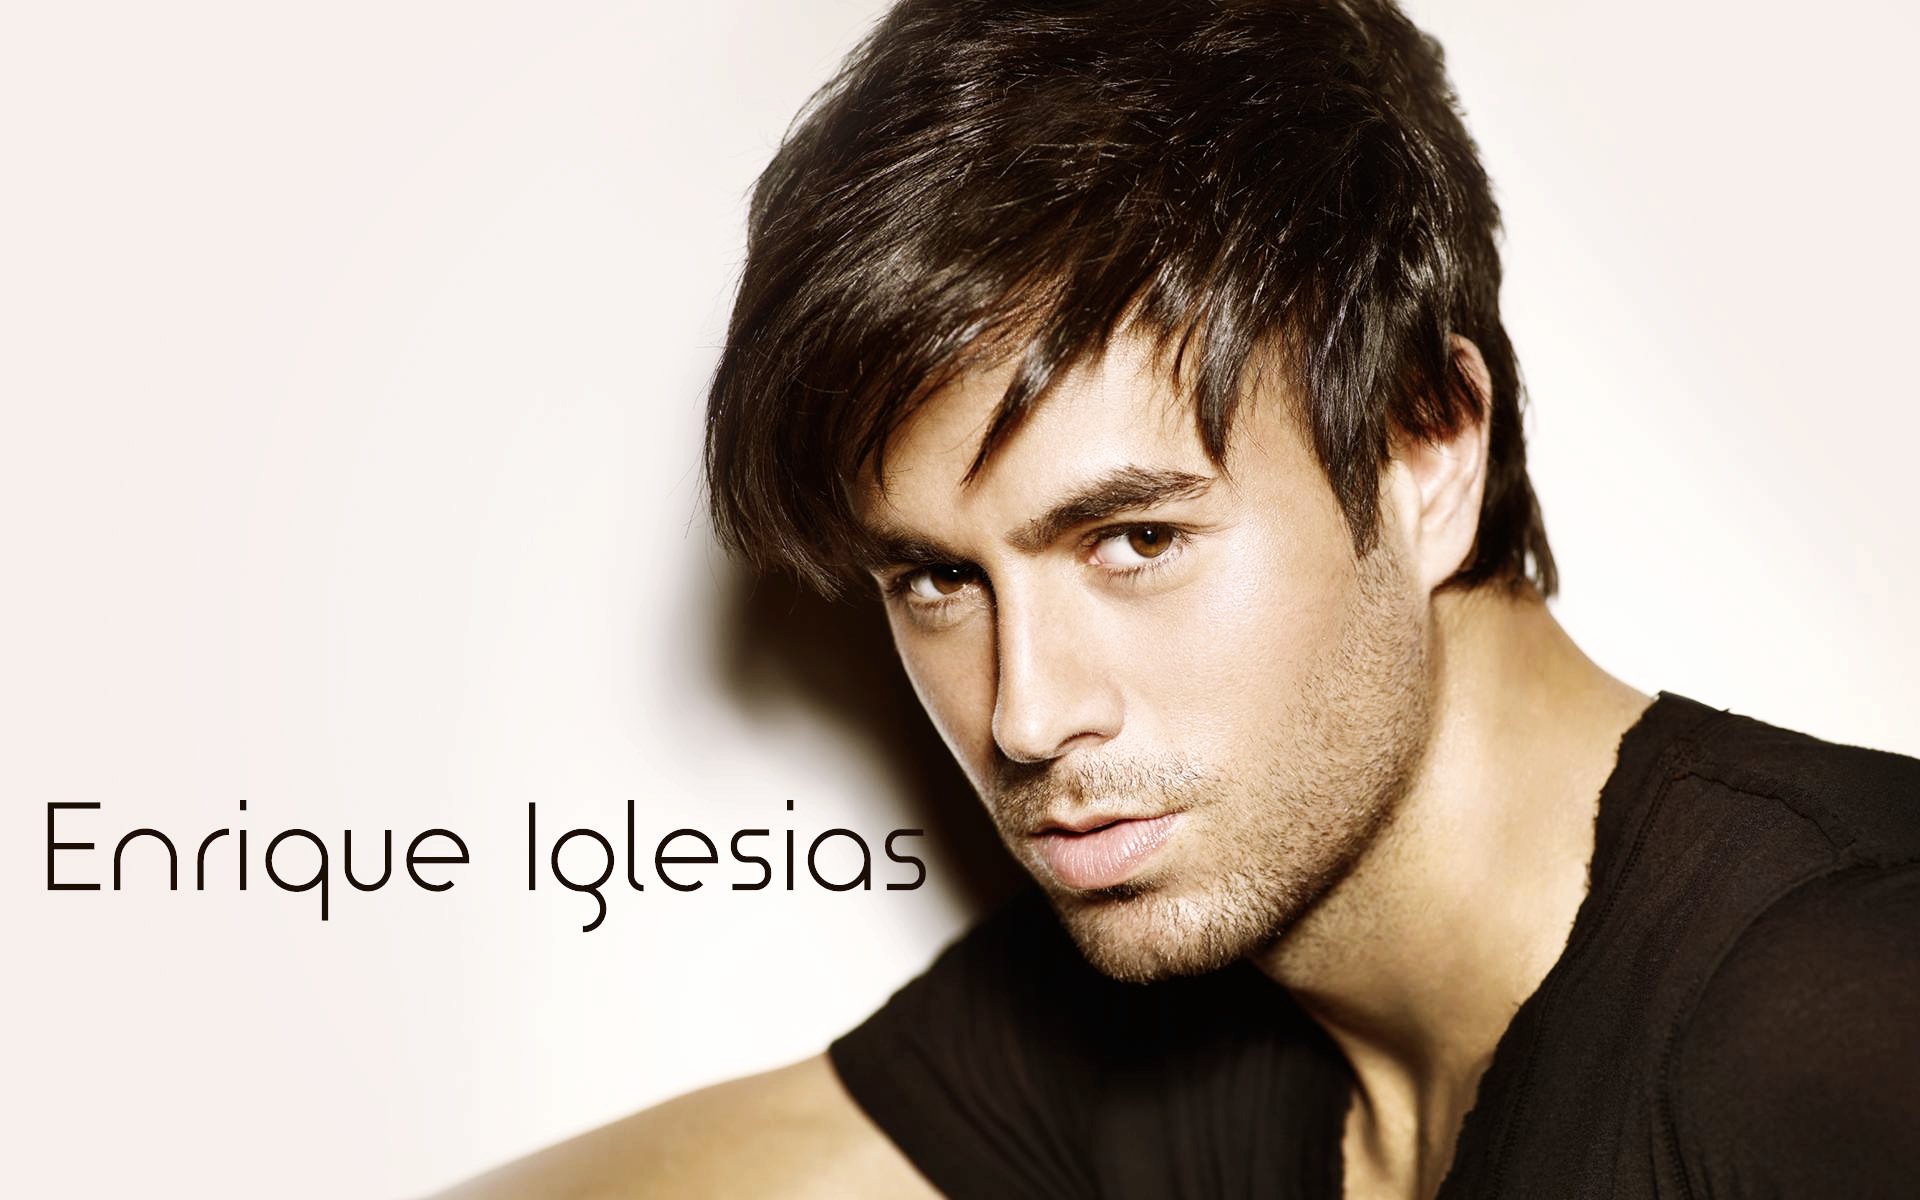 Amazing Enrique Iglesias Pictures & Backgrounds